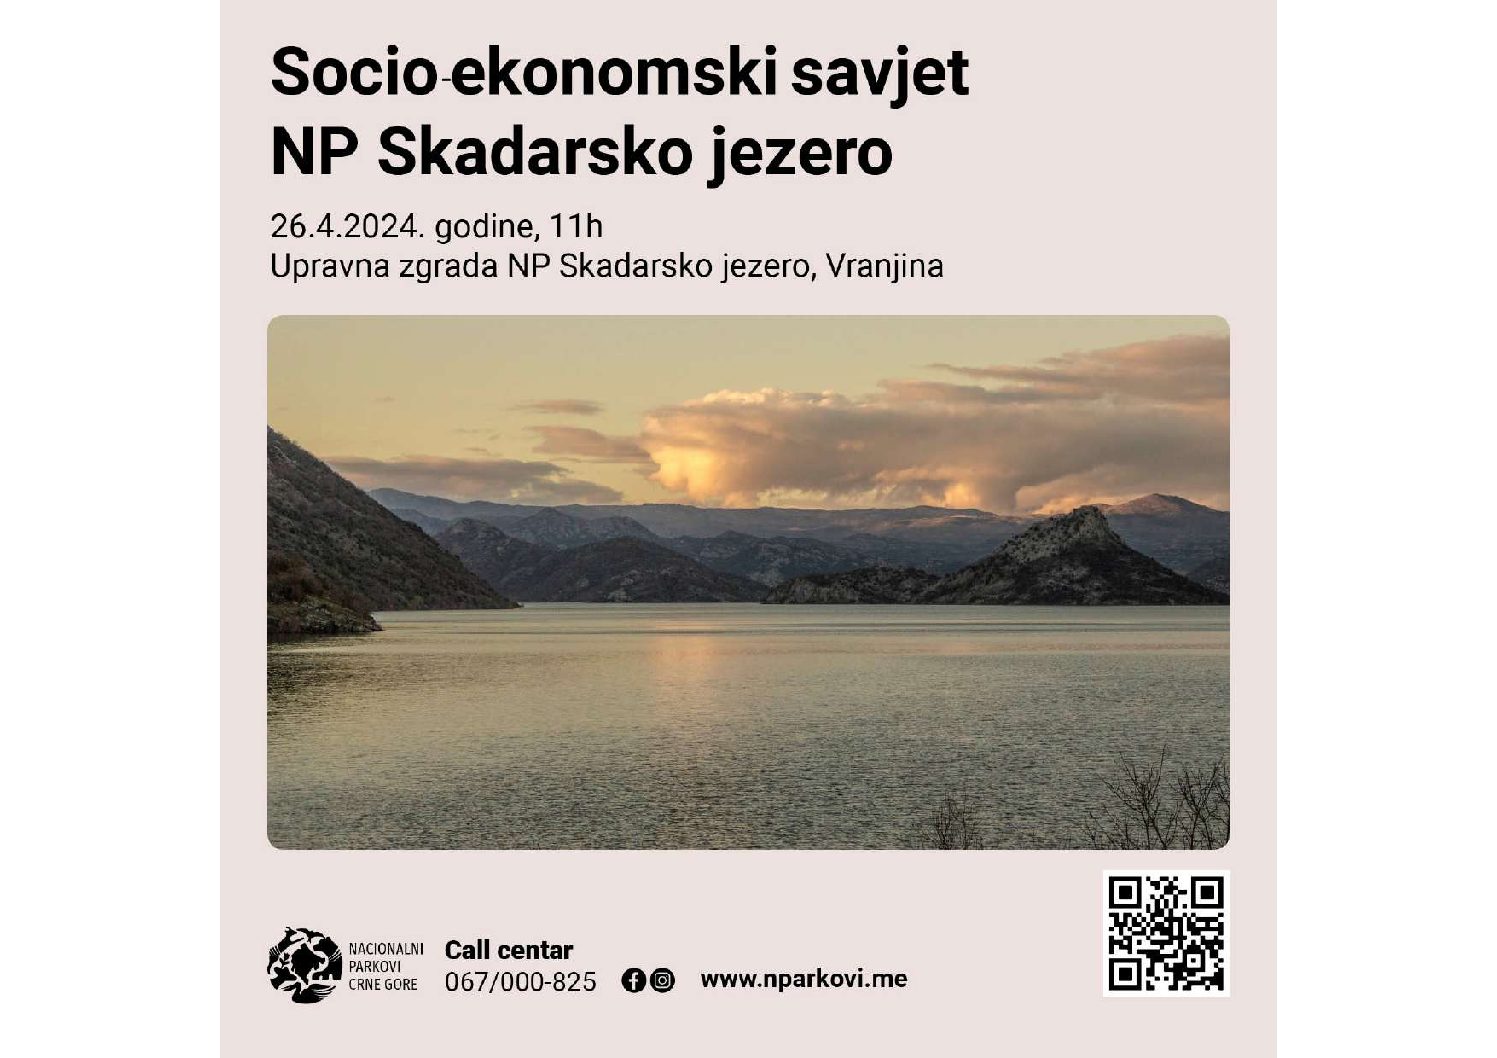 Pozivamo vas na Socio-ekonomski savjet NP Skadarsko jezero